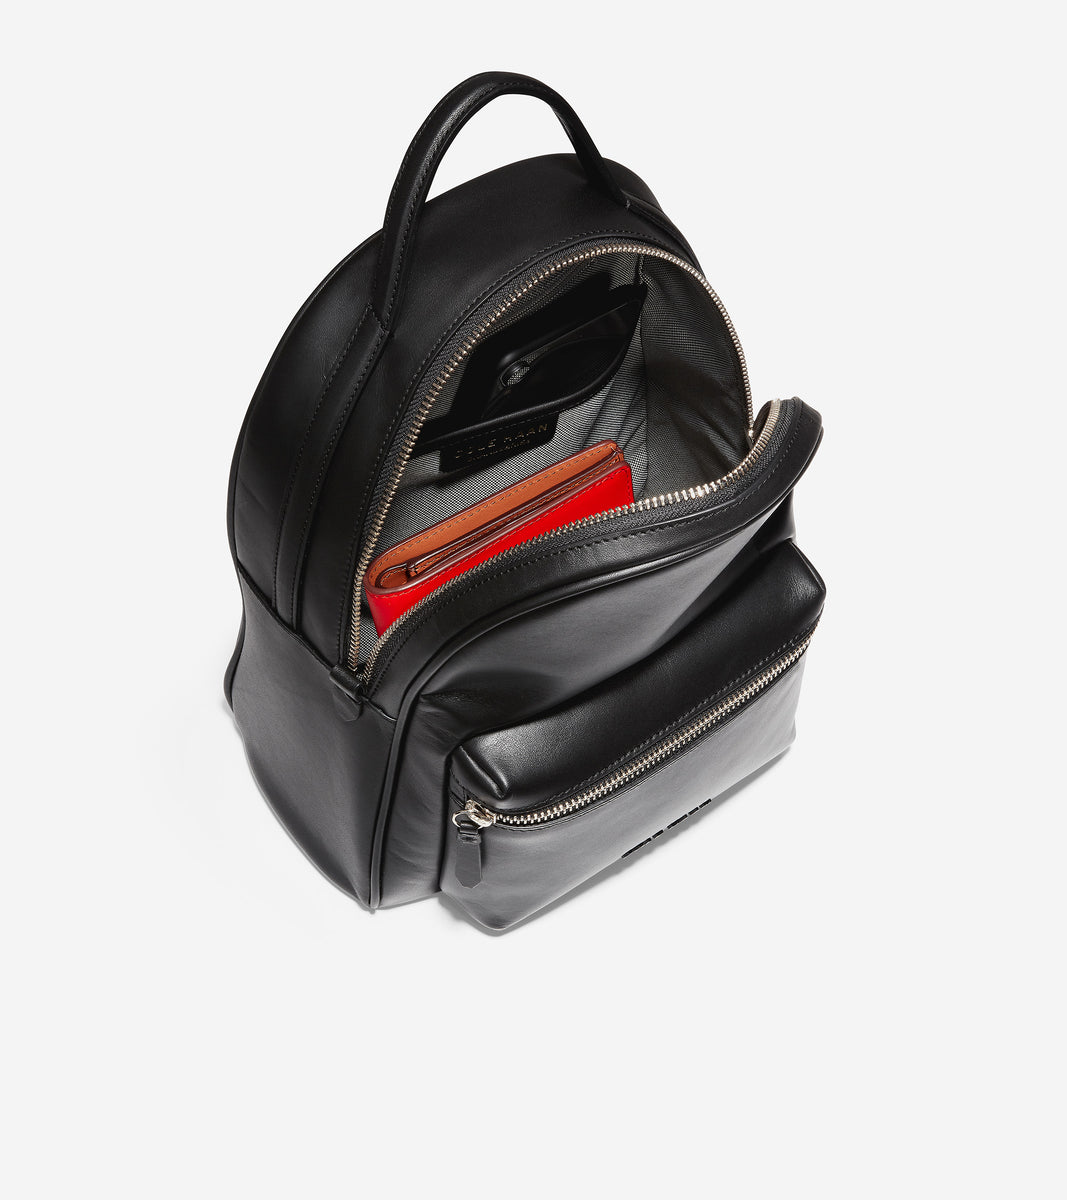 ColeHaan-Grand Ambition Mini Backpack-u04343-Black Leather